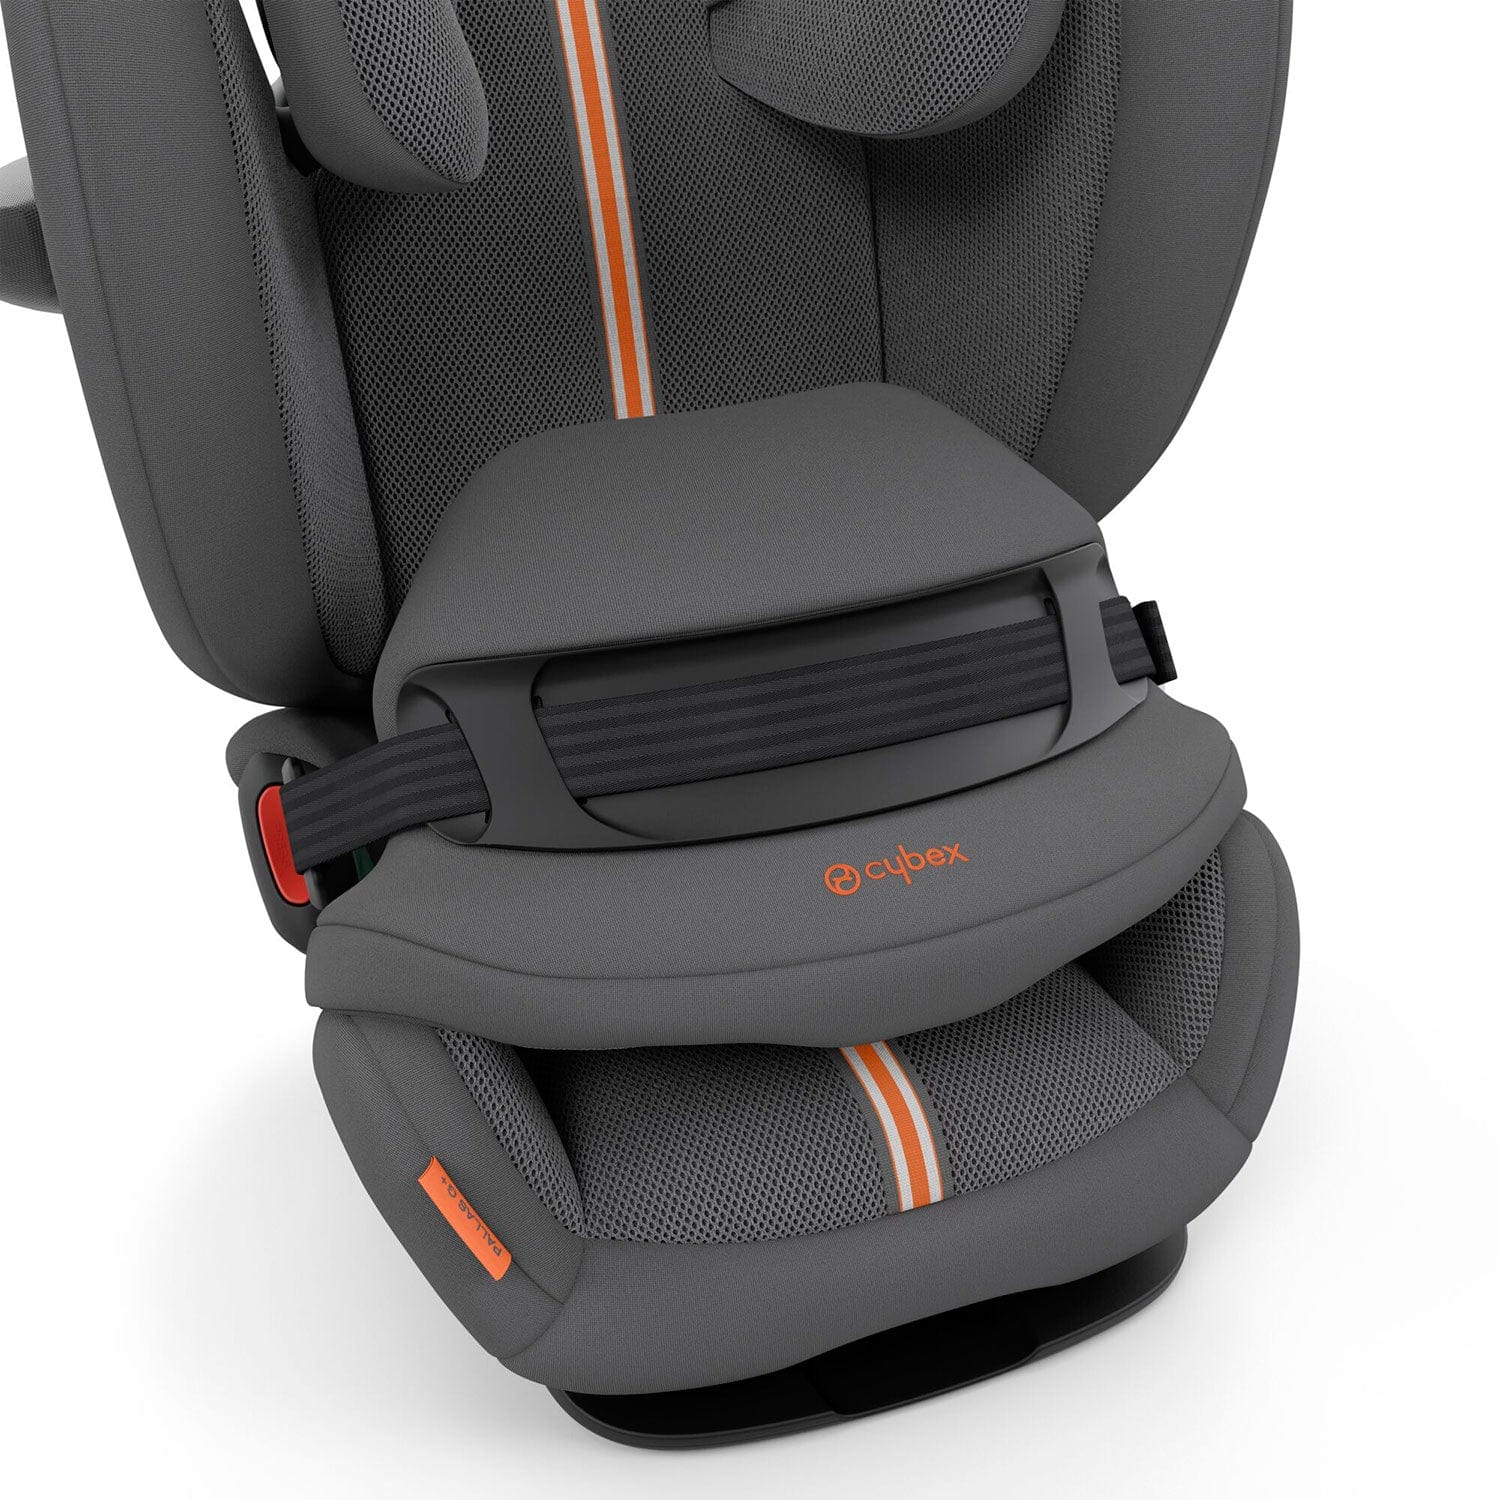 Cybex Pallas car seat - Car seats from 9 months - Car seats